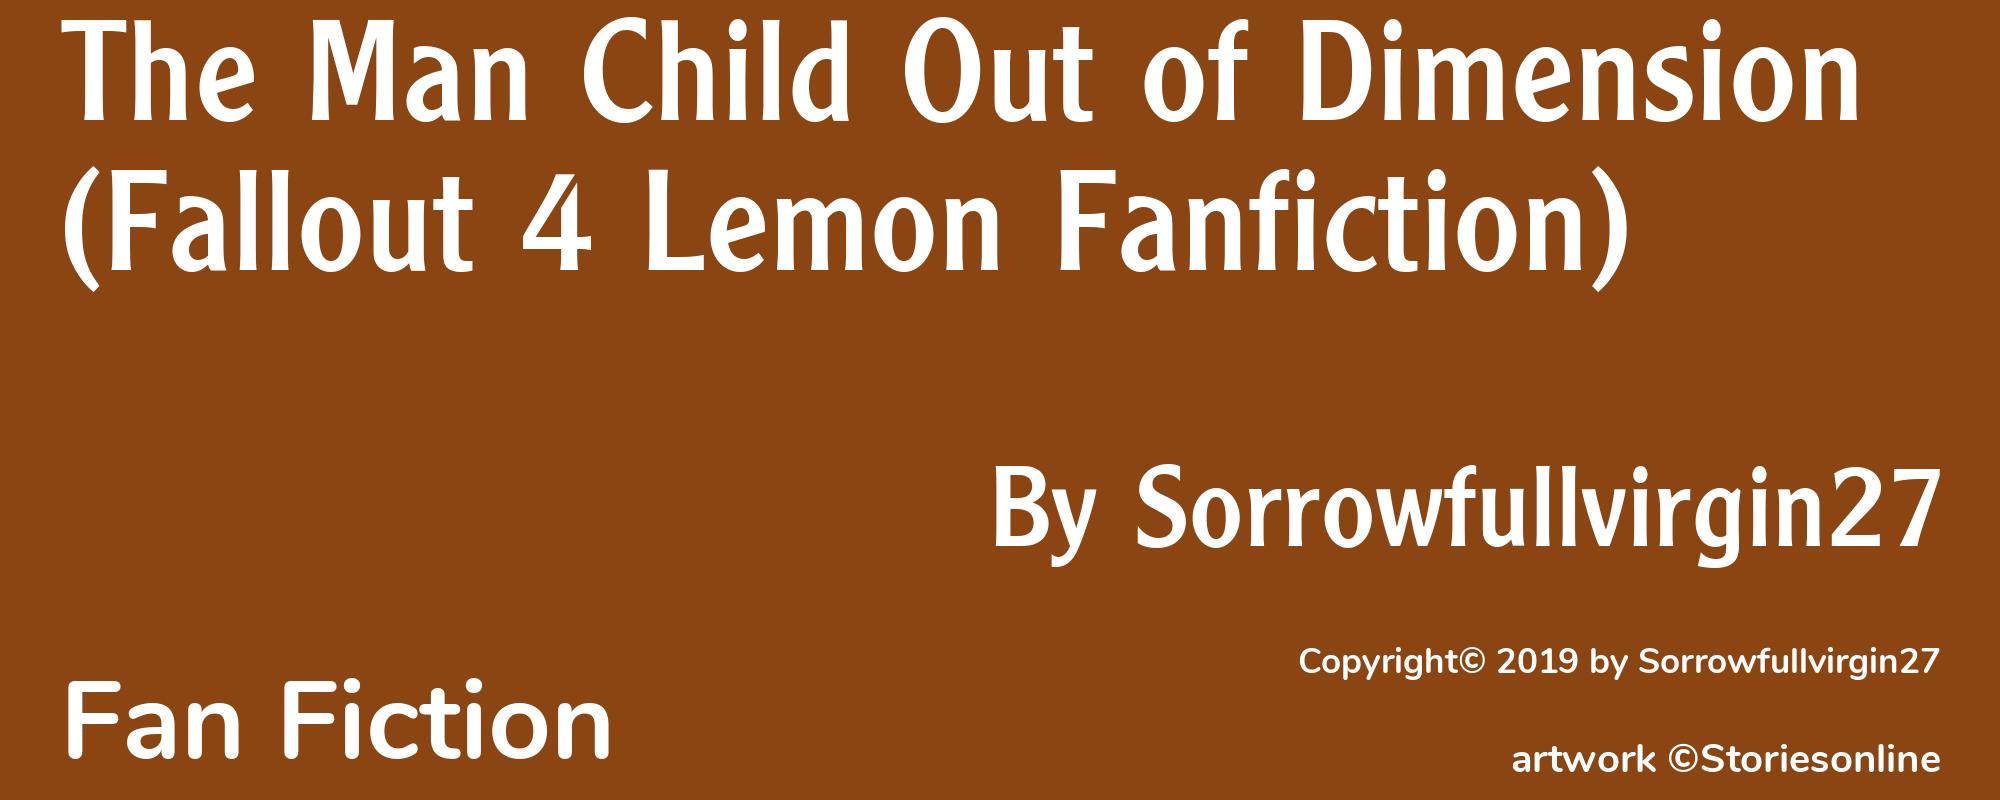 The Man Child Out of Dimension (Fallout 4 Lemon Fanfiction) - Cover